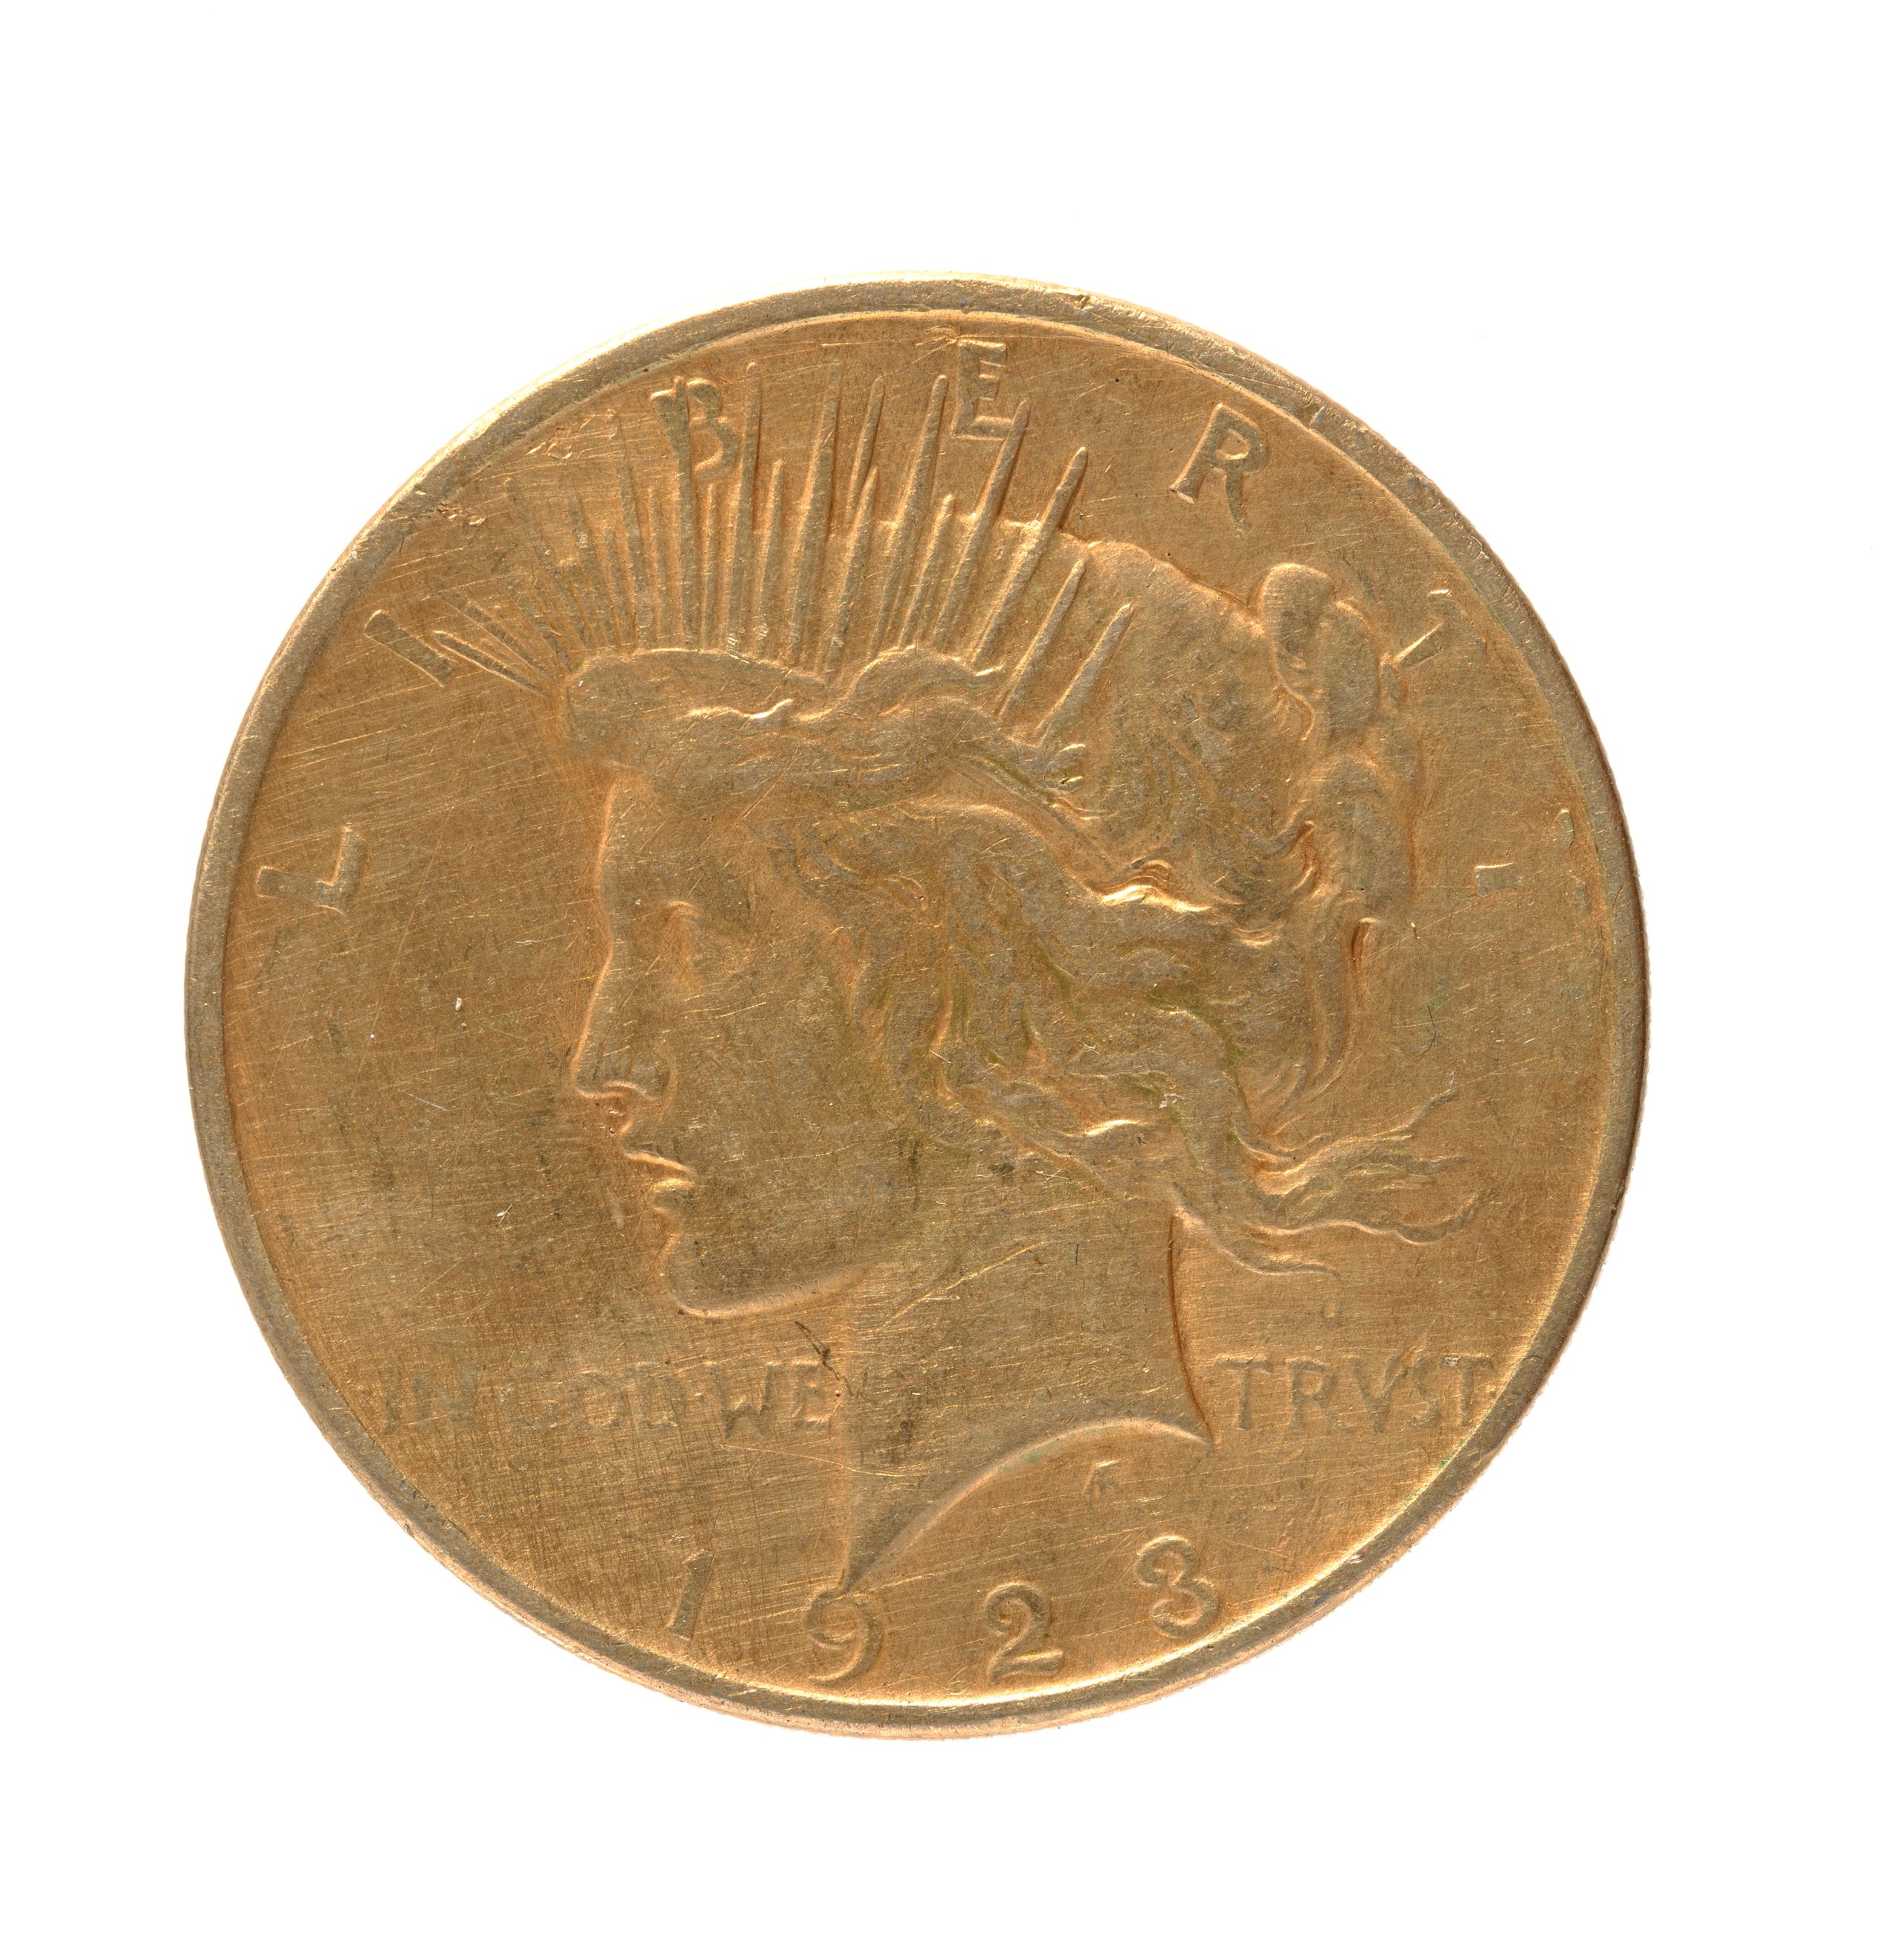 American commemorative peace One Dollar coin